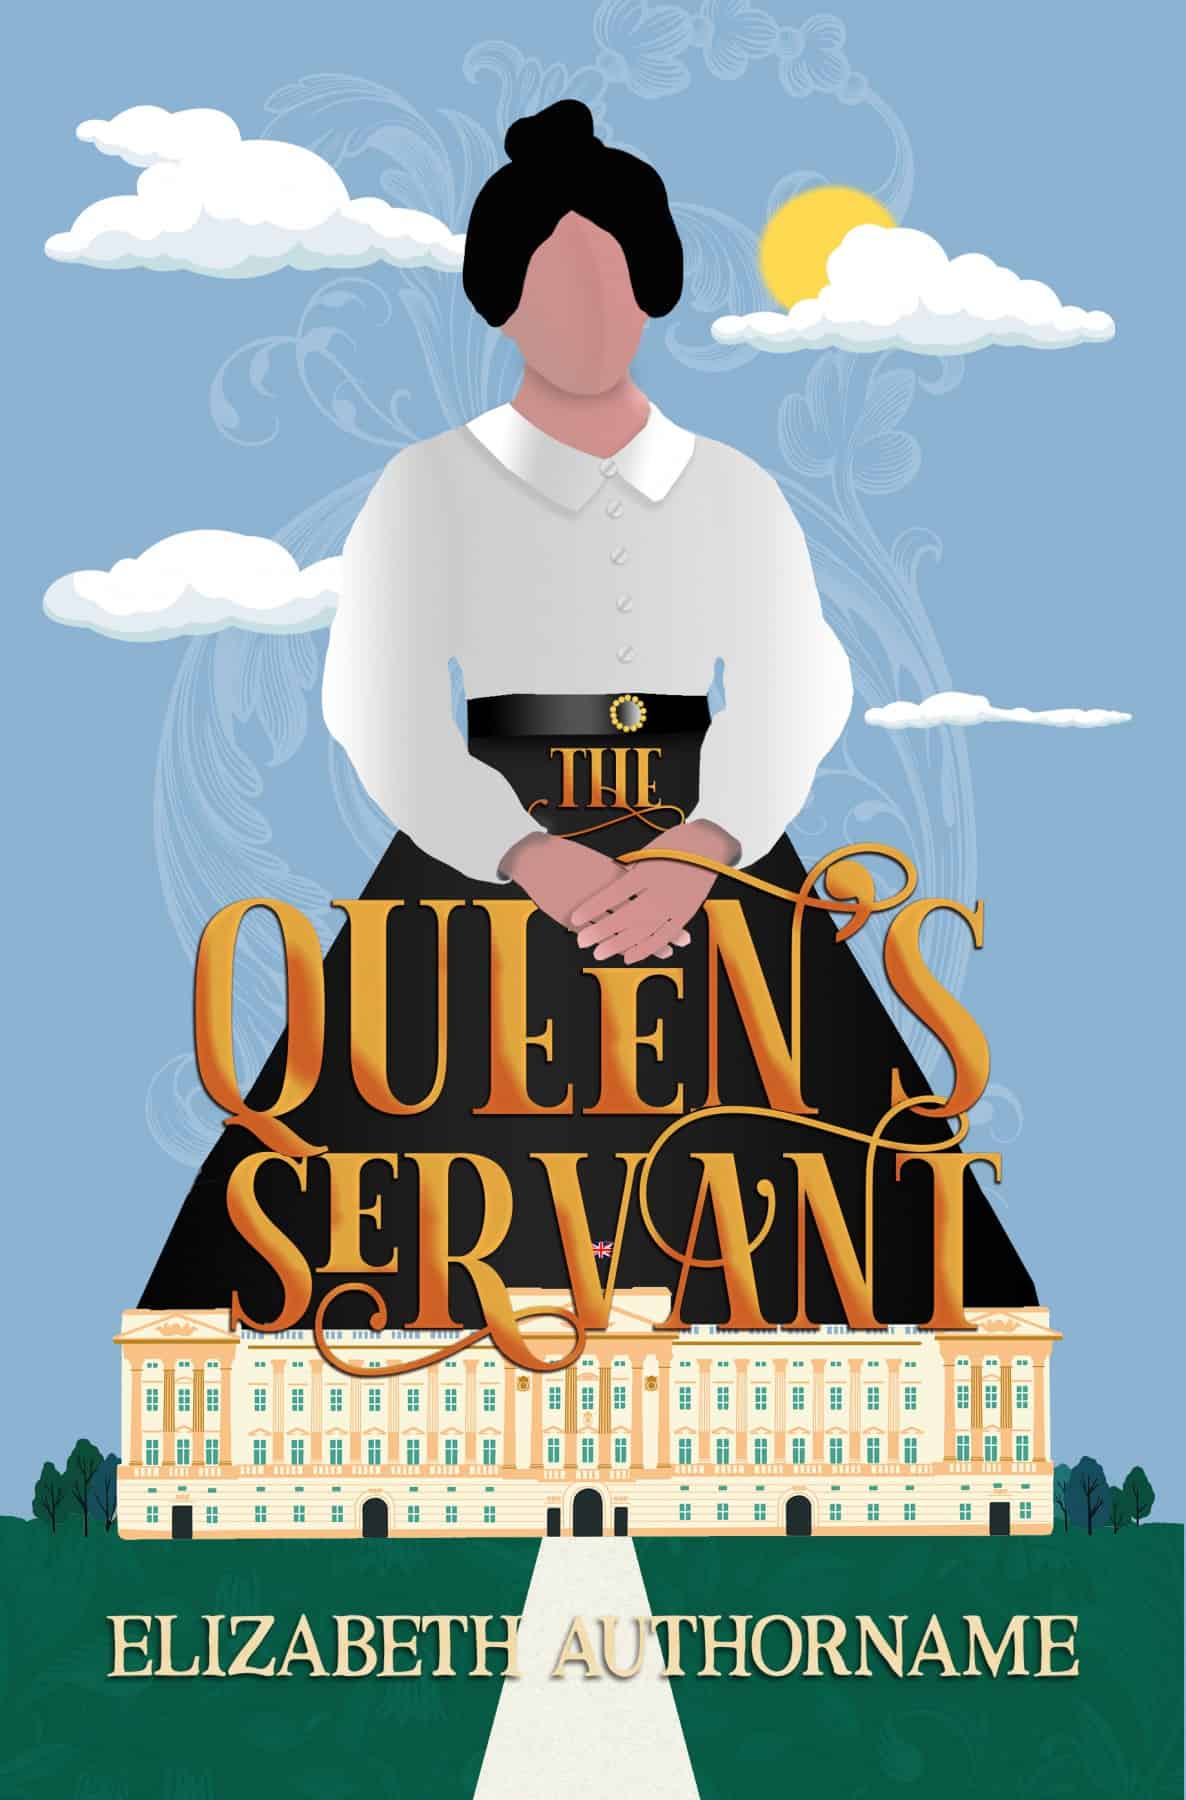 The Queens Servant The Book Cover Designer